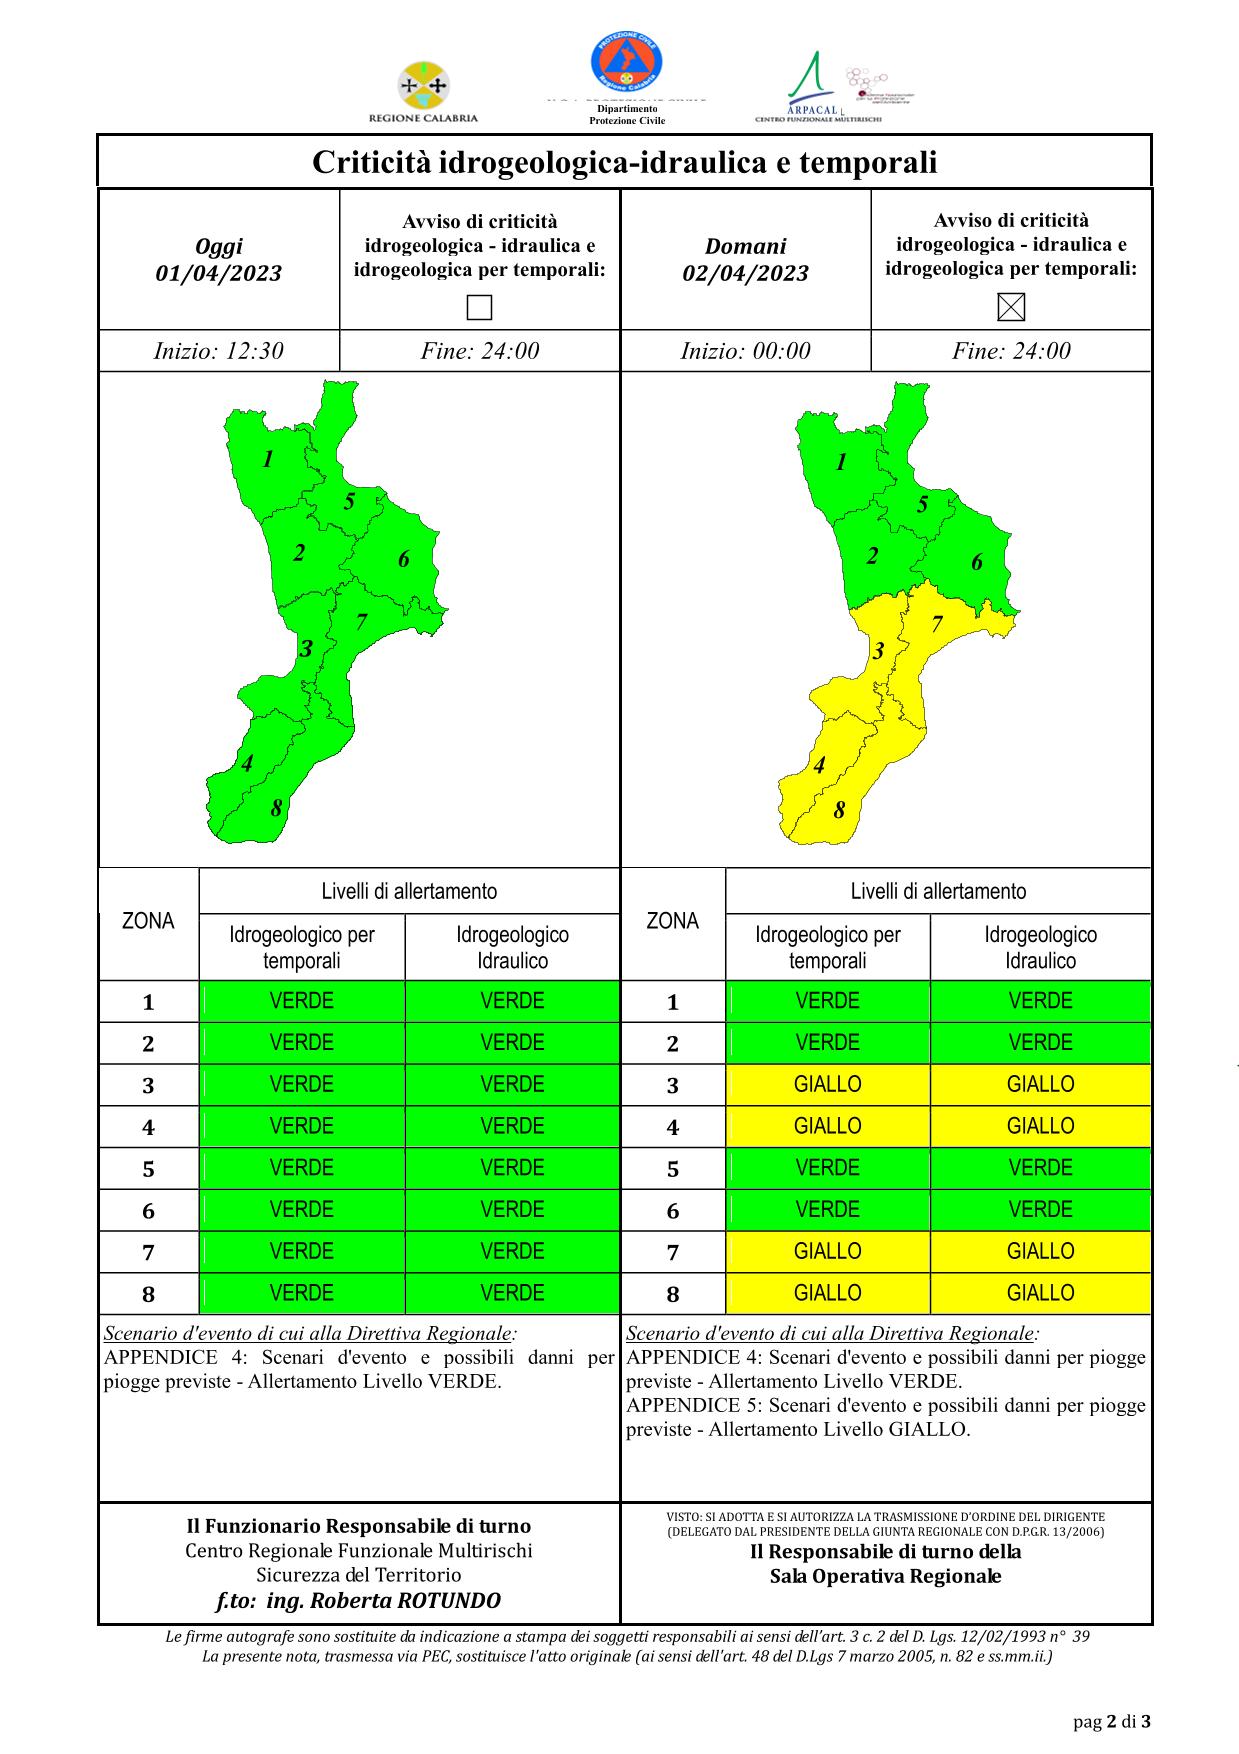 Criticità idrogeologica-idraulica e temporali in Calabria 01-04-2023